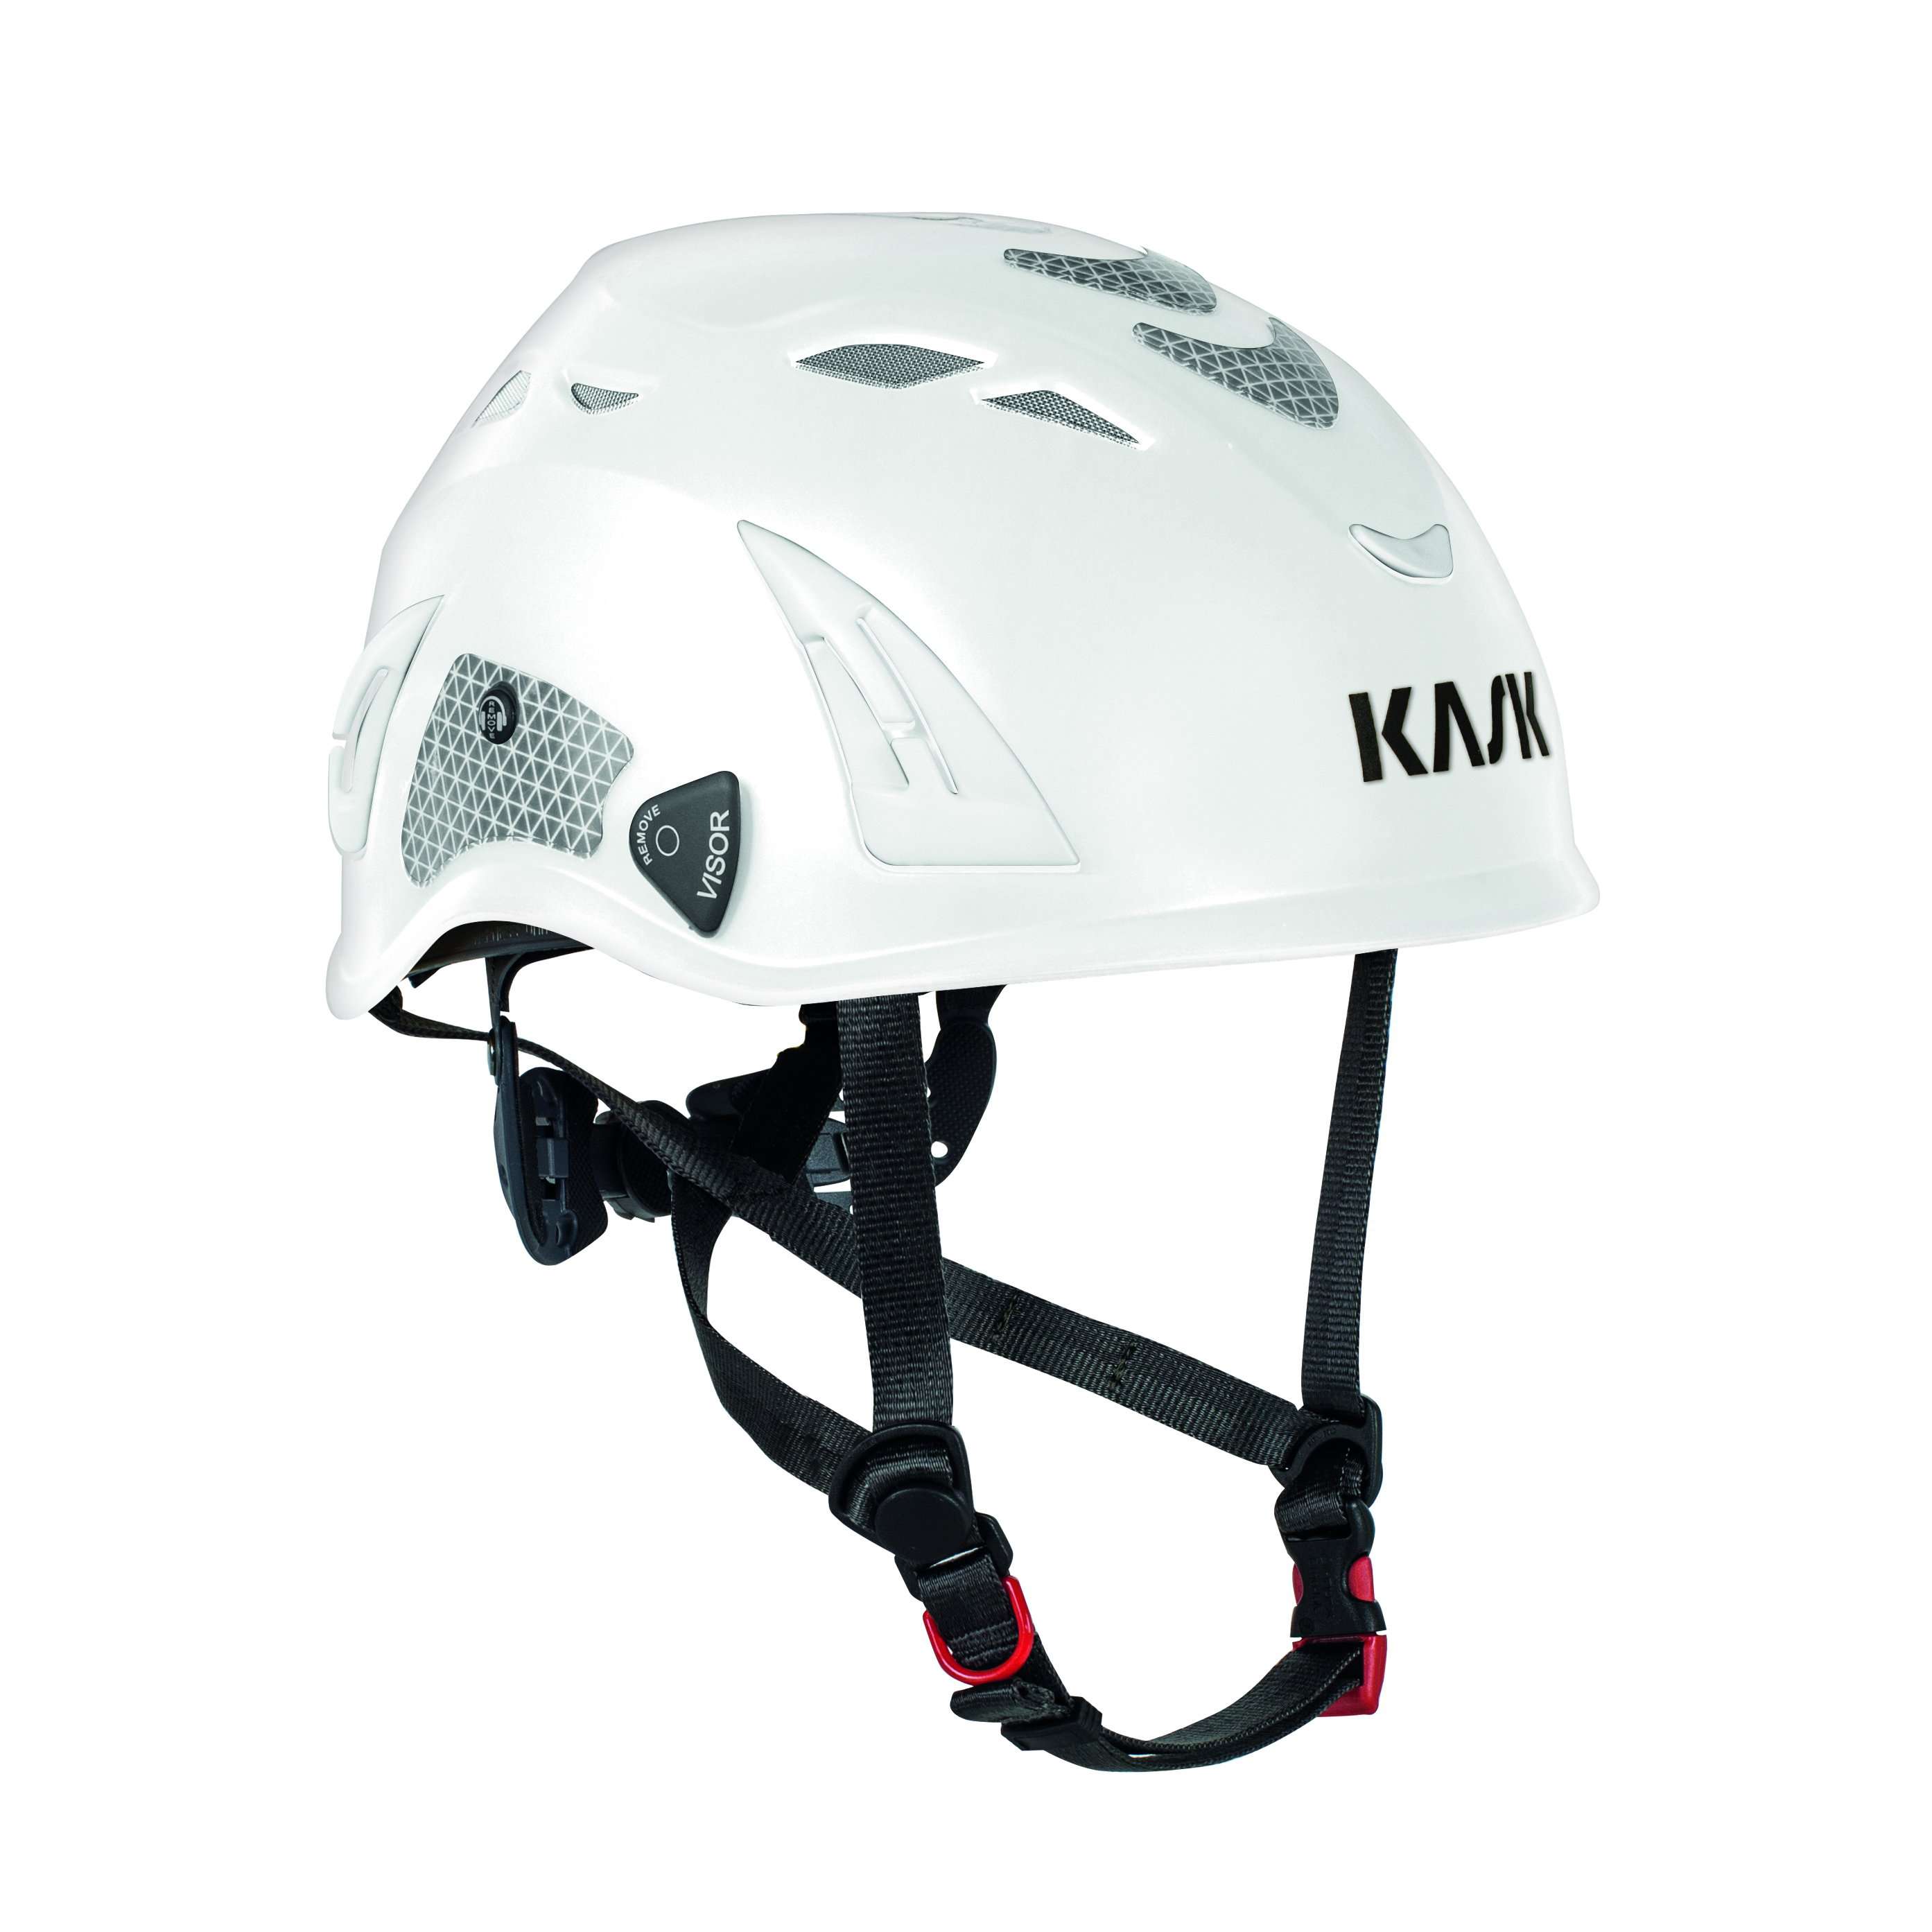 AHE00006 KASK Super Plasma PL HV Helmet EN12492